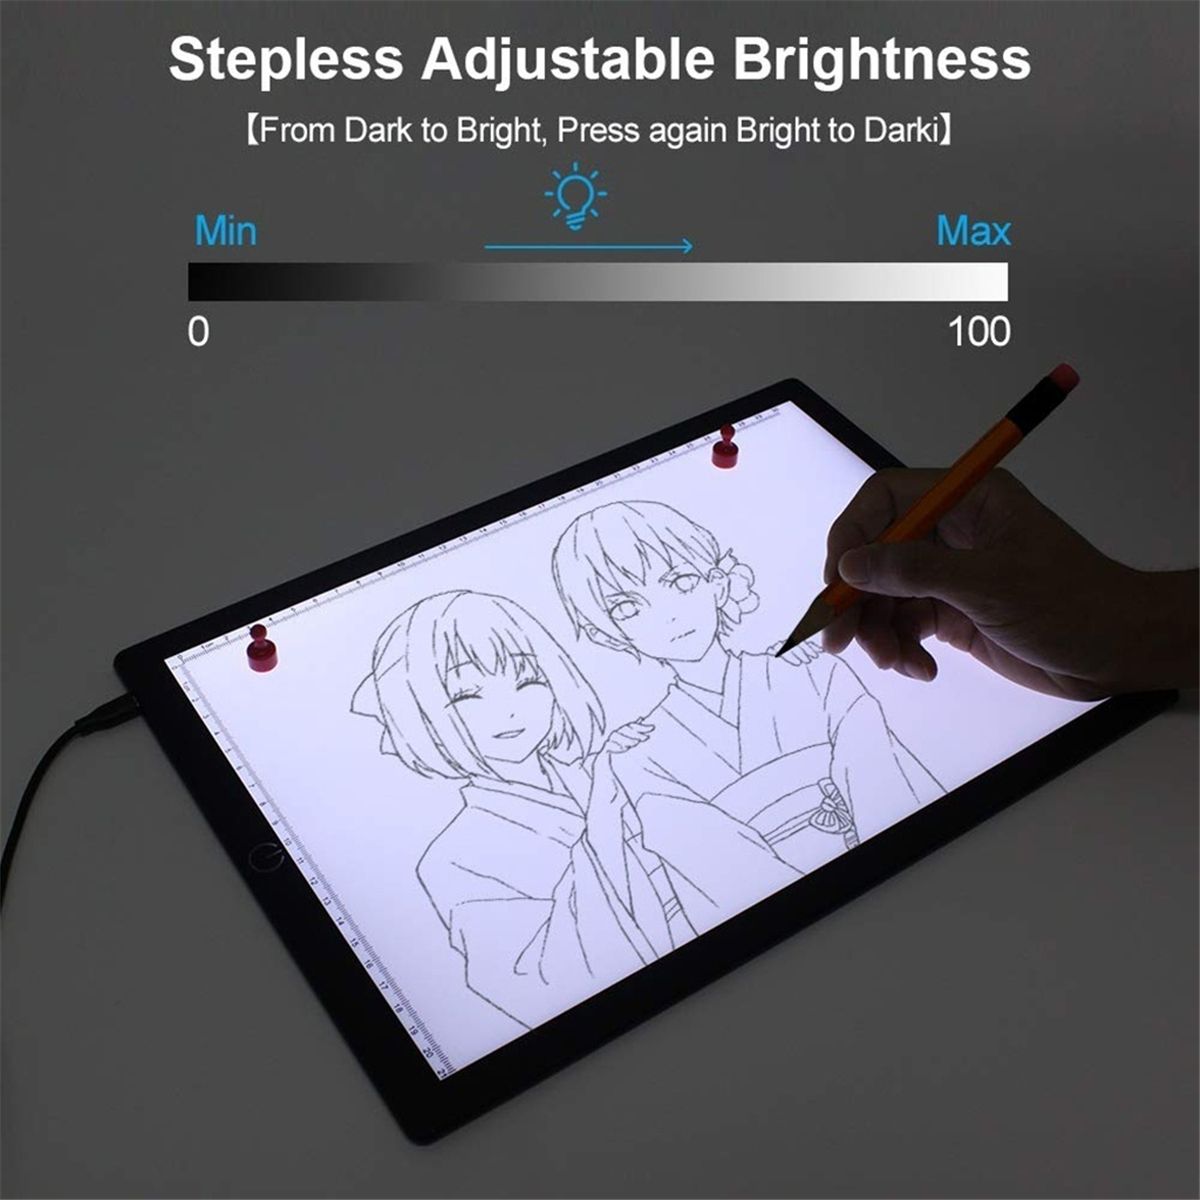 A3-A4-A5-LED-Light-Box-Tracing-Drawing-Board-Art-Design-Pad-Slim-Lightbox-USB-Projector-1647870